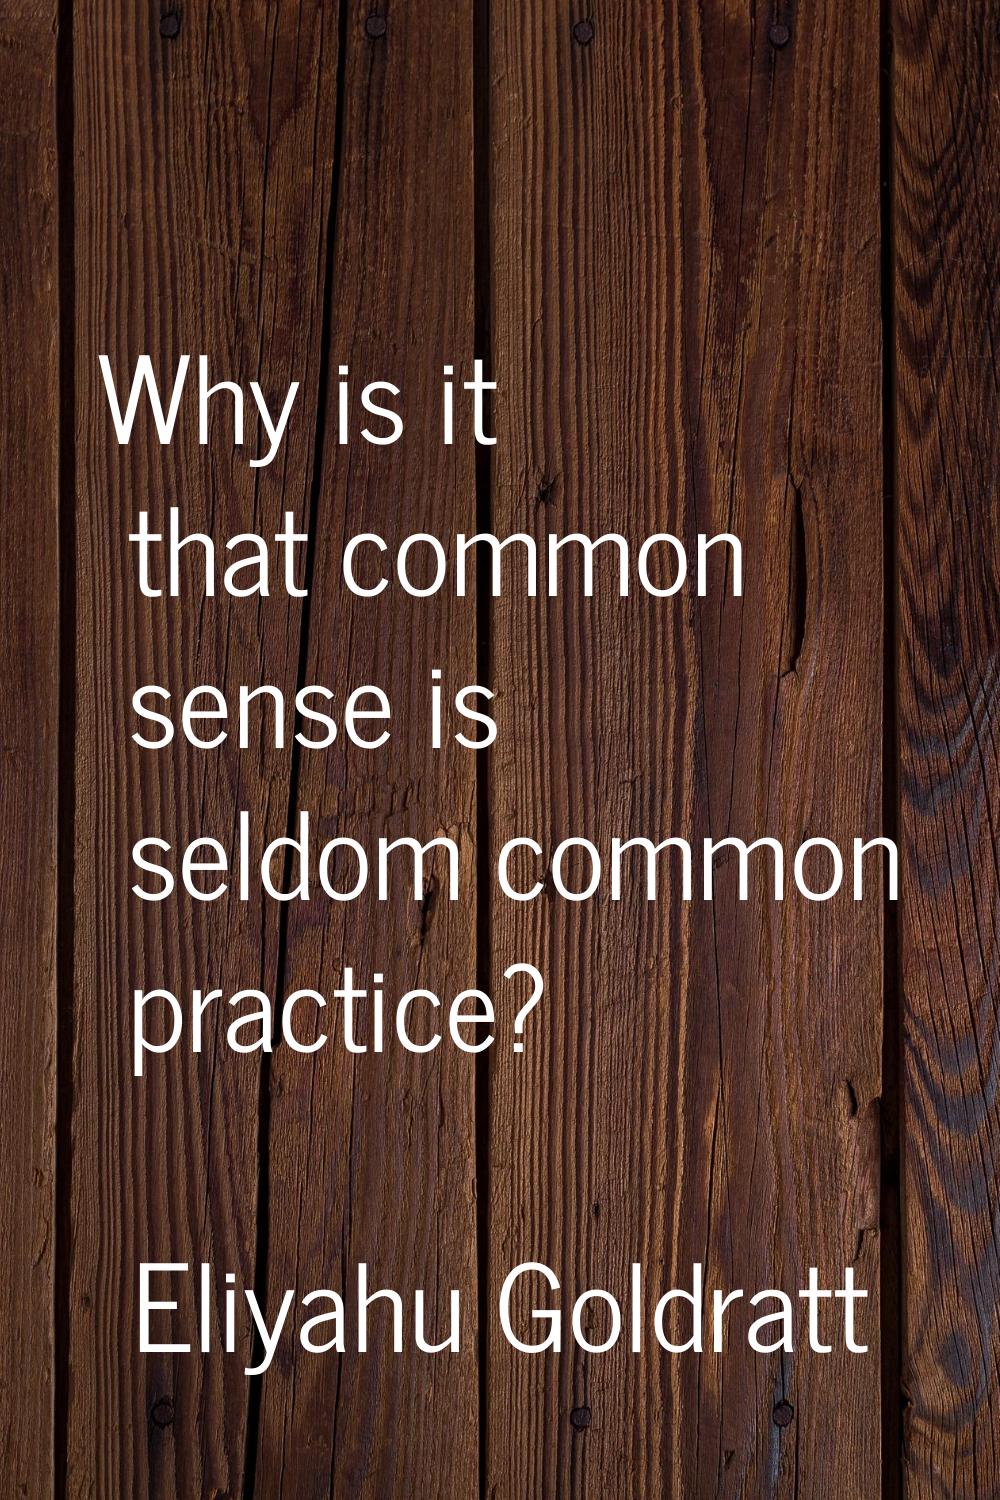 Why is it that common sense is seldom common practice?